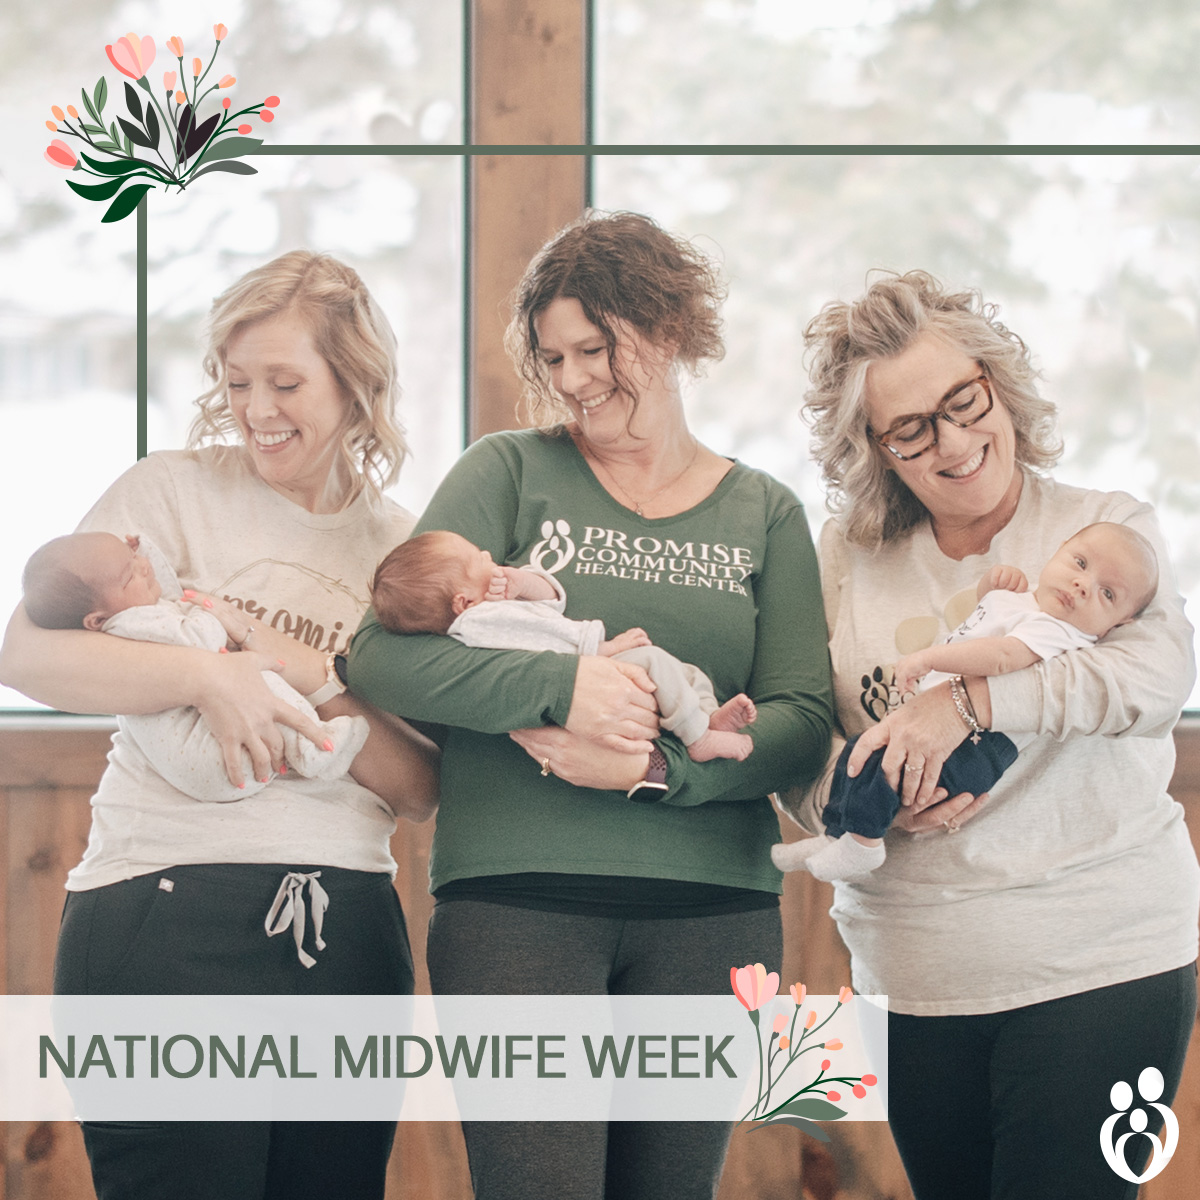 Midwife in northwest Iowa| Promise Community Health Center in Sioux Center, Iowa | Midwives in northwest Iowa, Midwives in southeast South Dakota, Midwives in southwest Minnesota | Midwives in Sioux Falls South Dakota, Midwives in Beresford South Dakota, Midwives in Sioux City IA, Midwives in LeMars IA, Midwives in Worthington MN, Midwives in Iowa, Midwives in South Dakota, Midwives in Minnesota